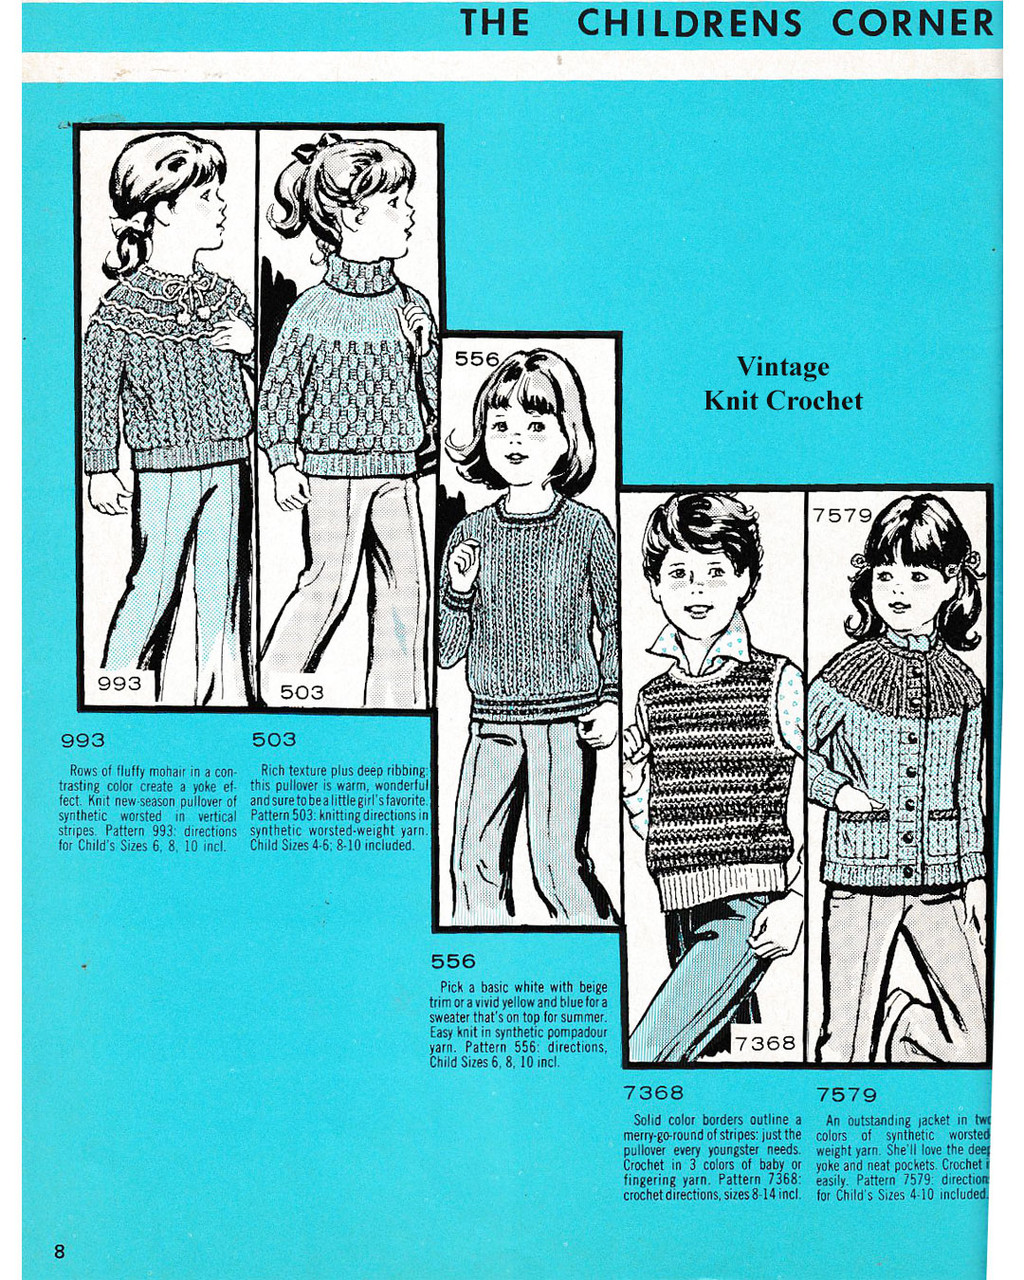 Design 7579 Girls crochet Jacket in the 1985 Needlecraft Patterns Catalog